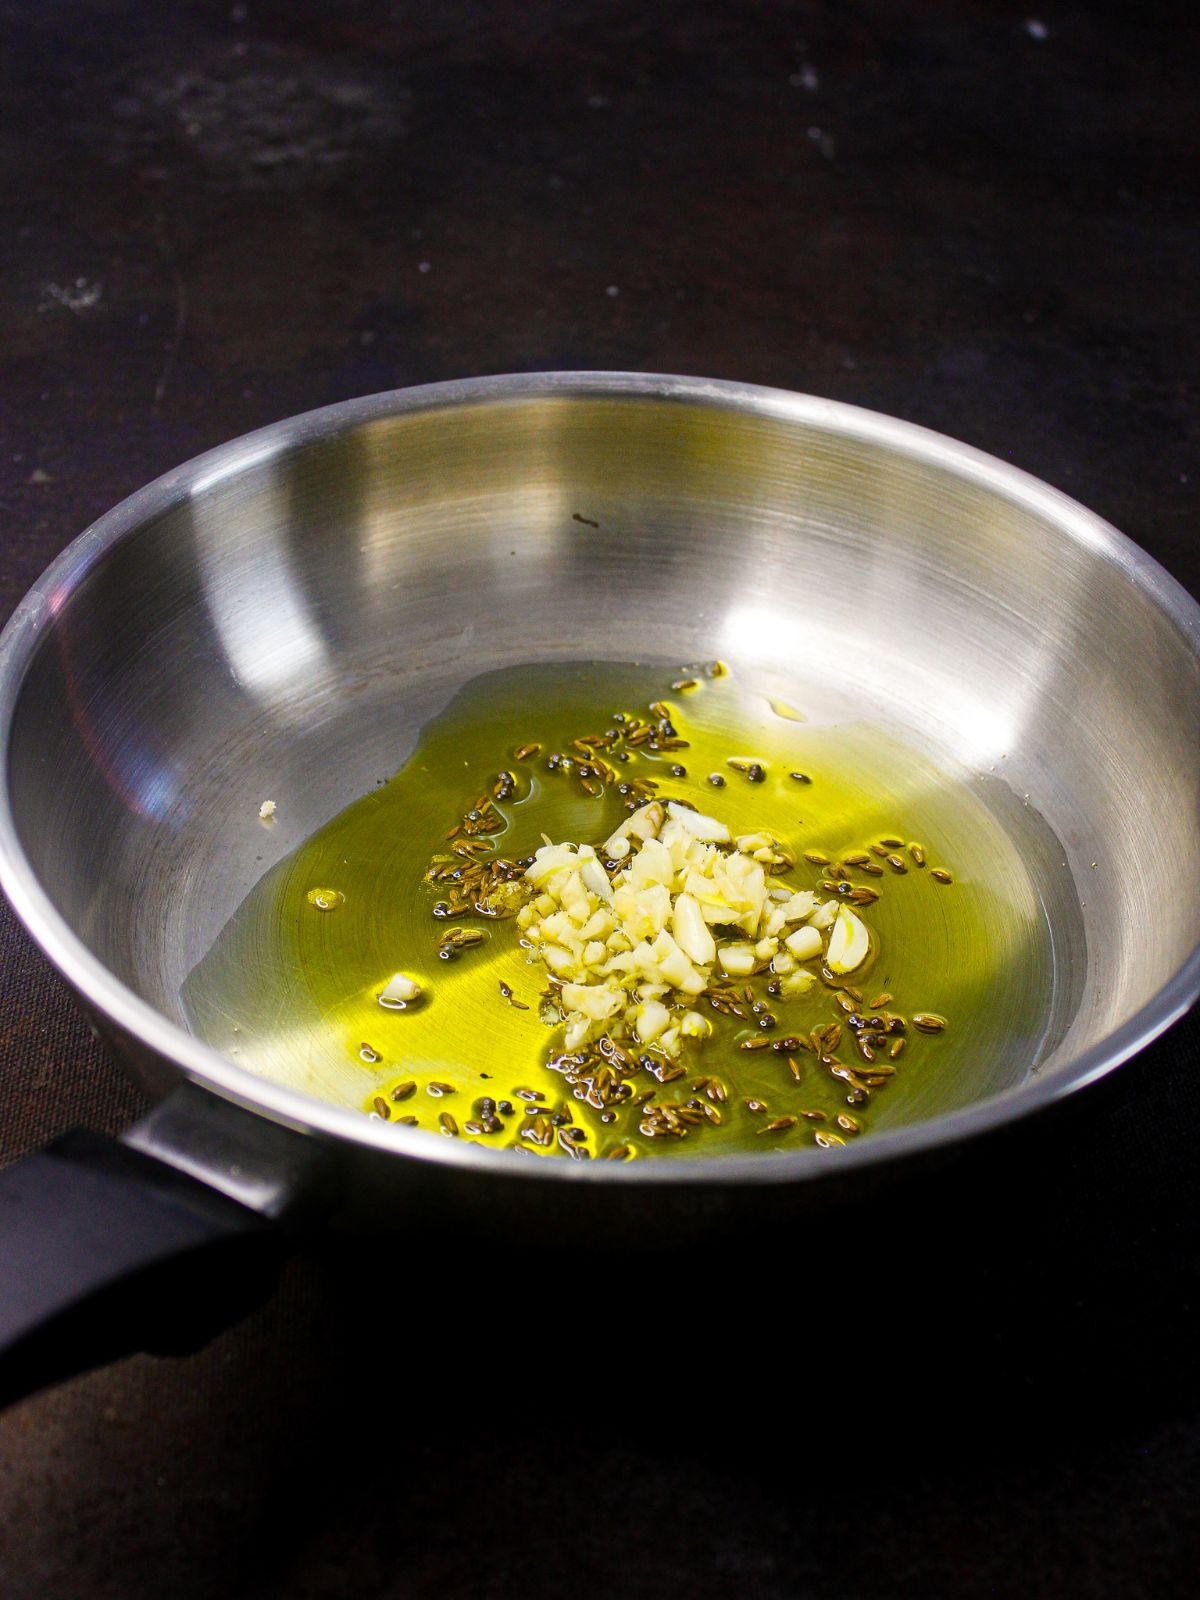 Add minced garlic and saute